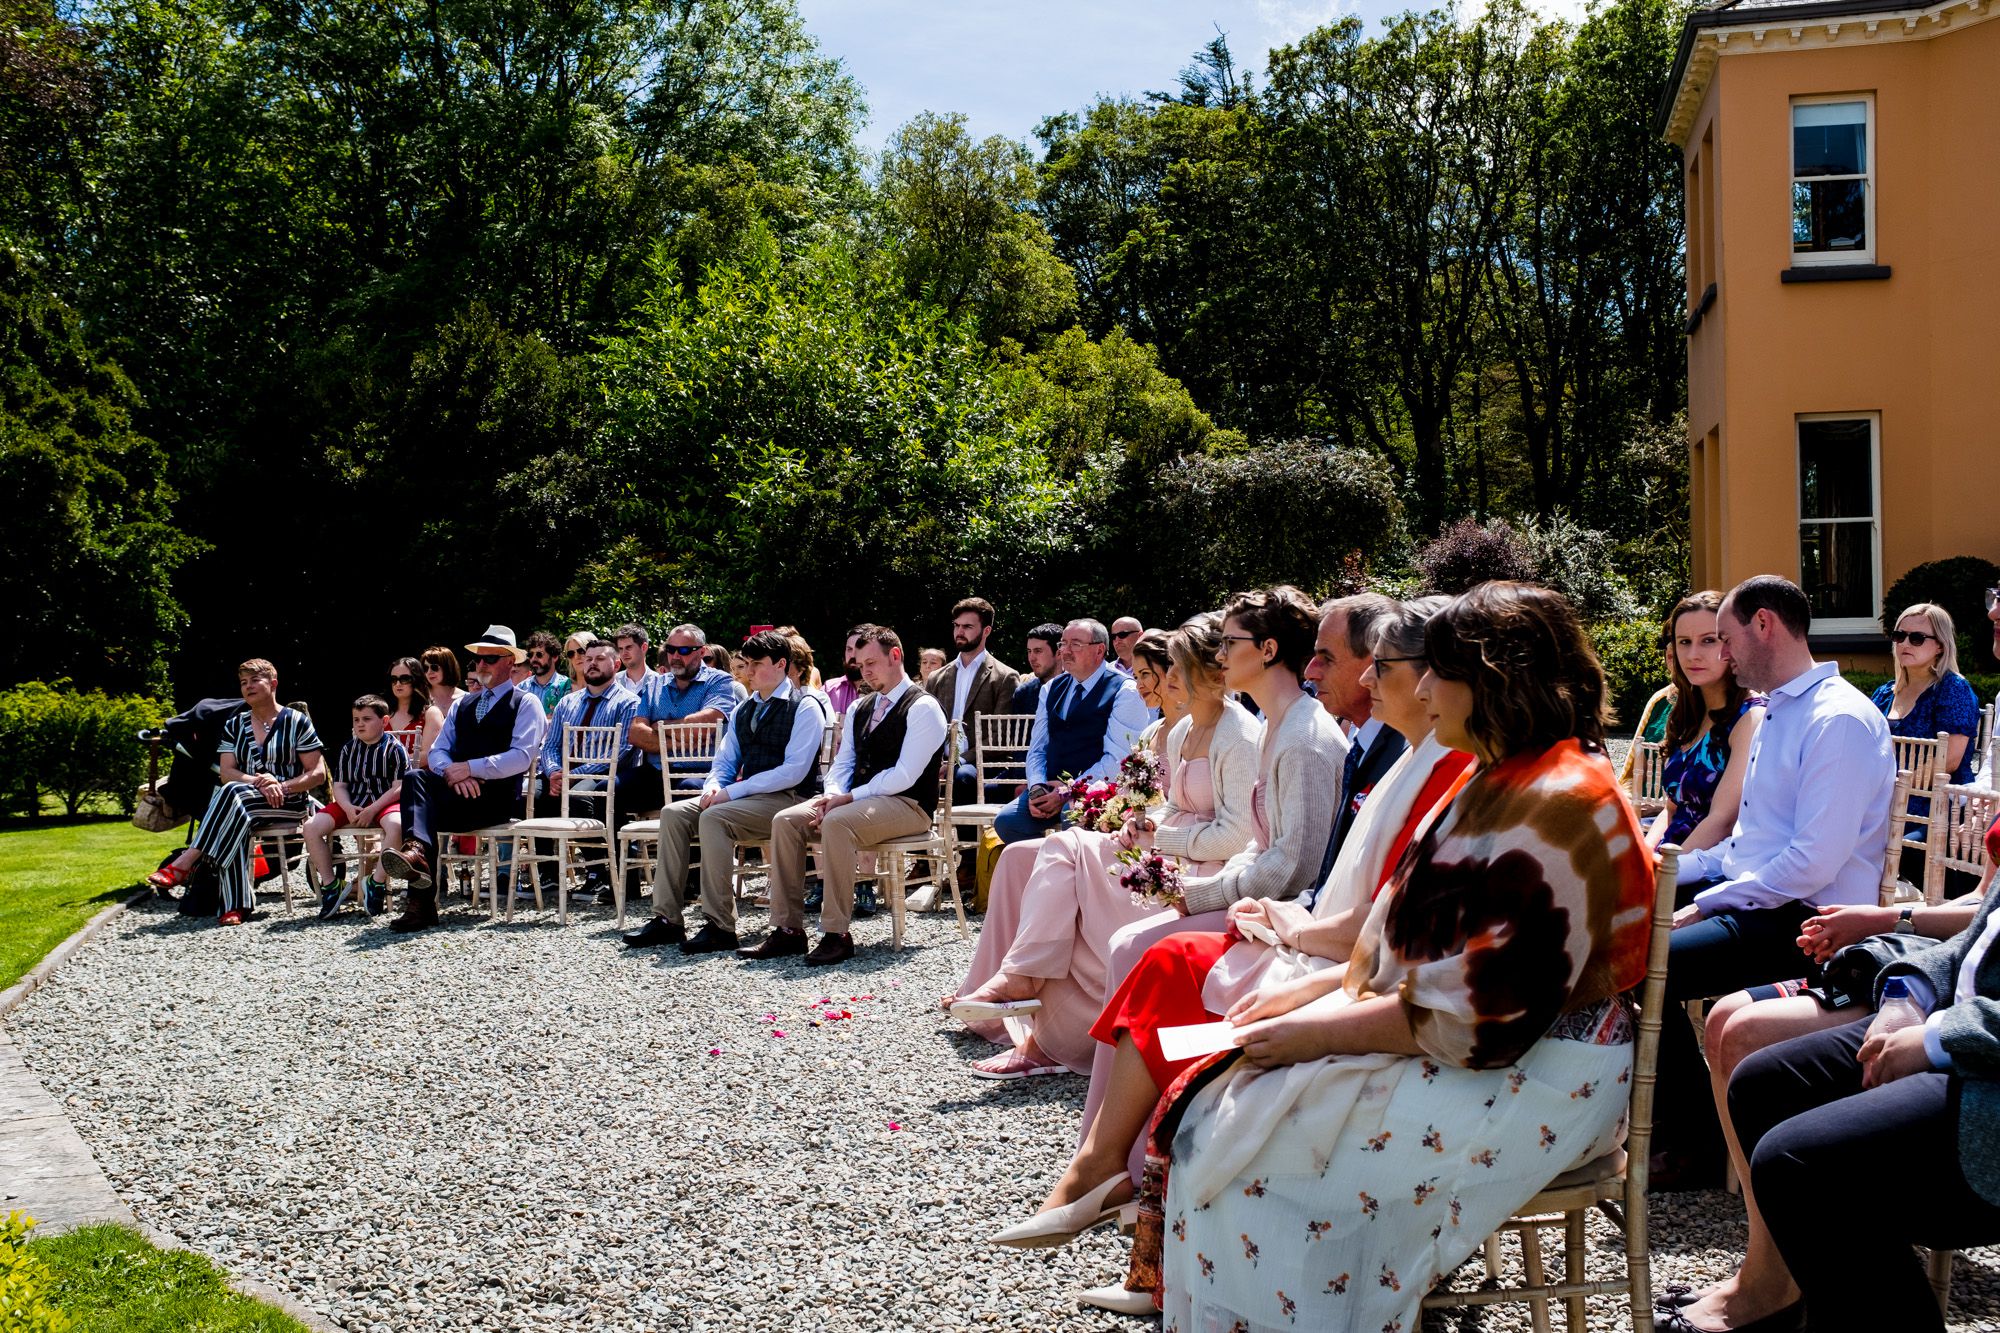 inish-beg-outdoor-wedding-ceremony-summer